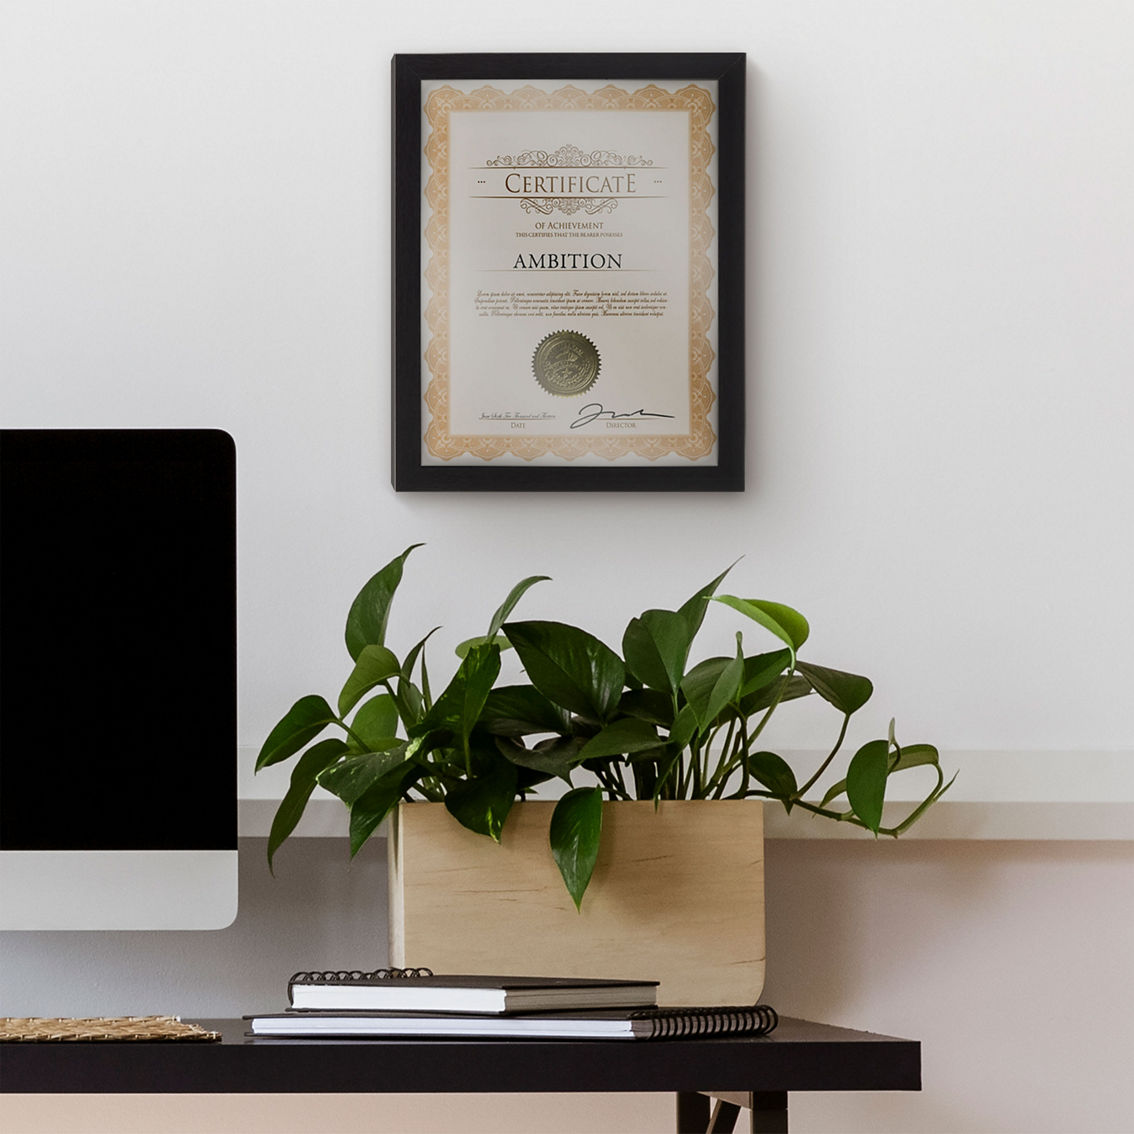 Melannco 8 x10 in. Black Wood Certificate Frame - Image 4 of 4